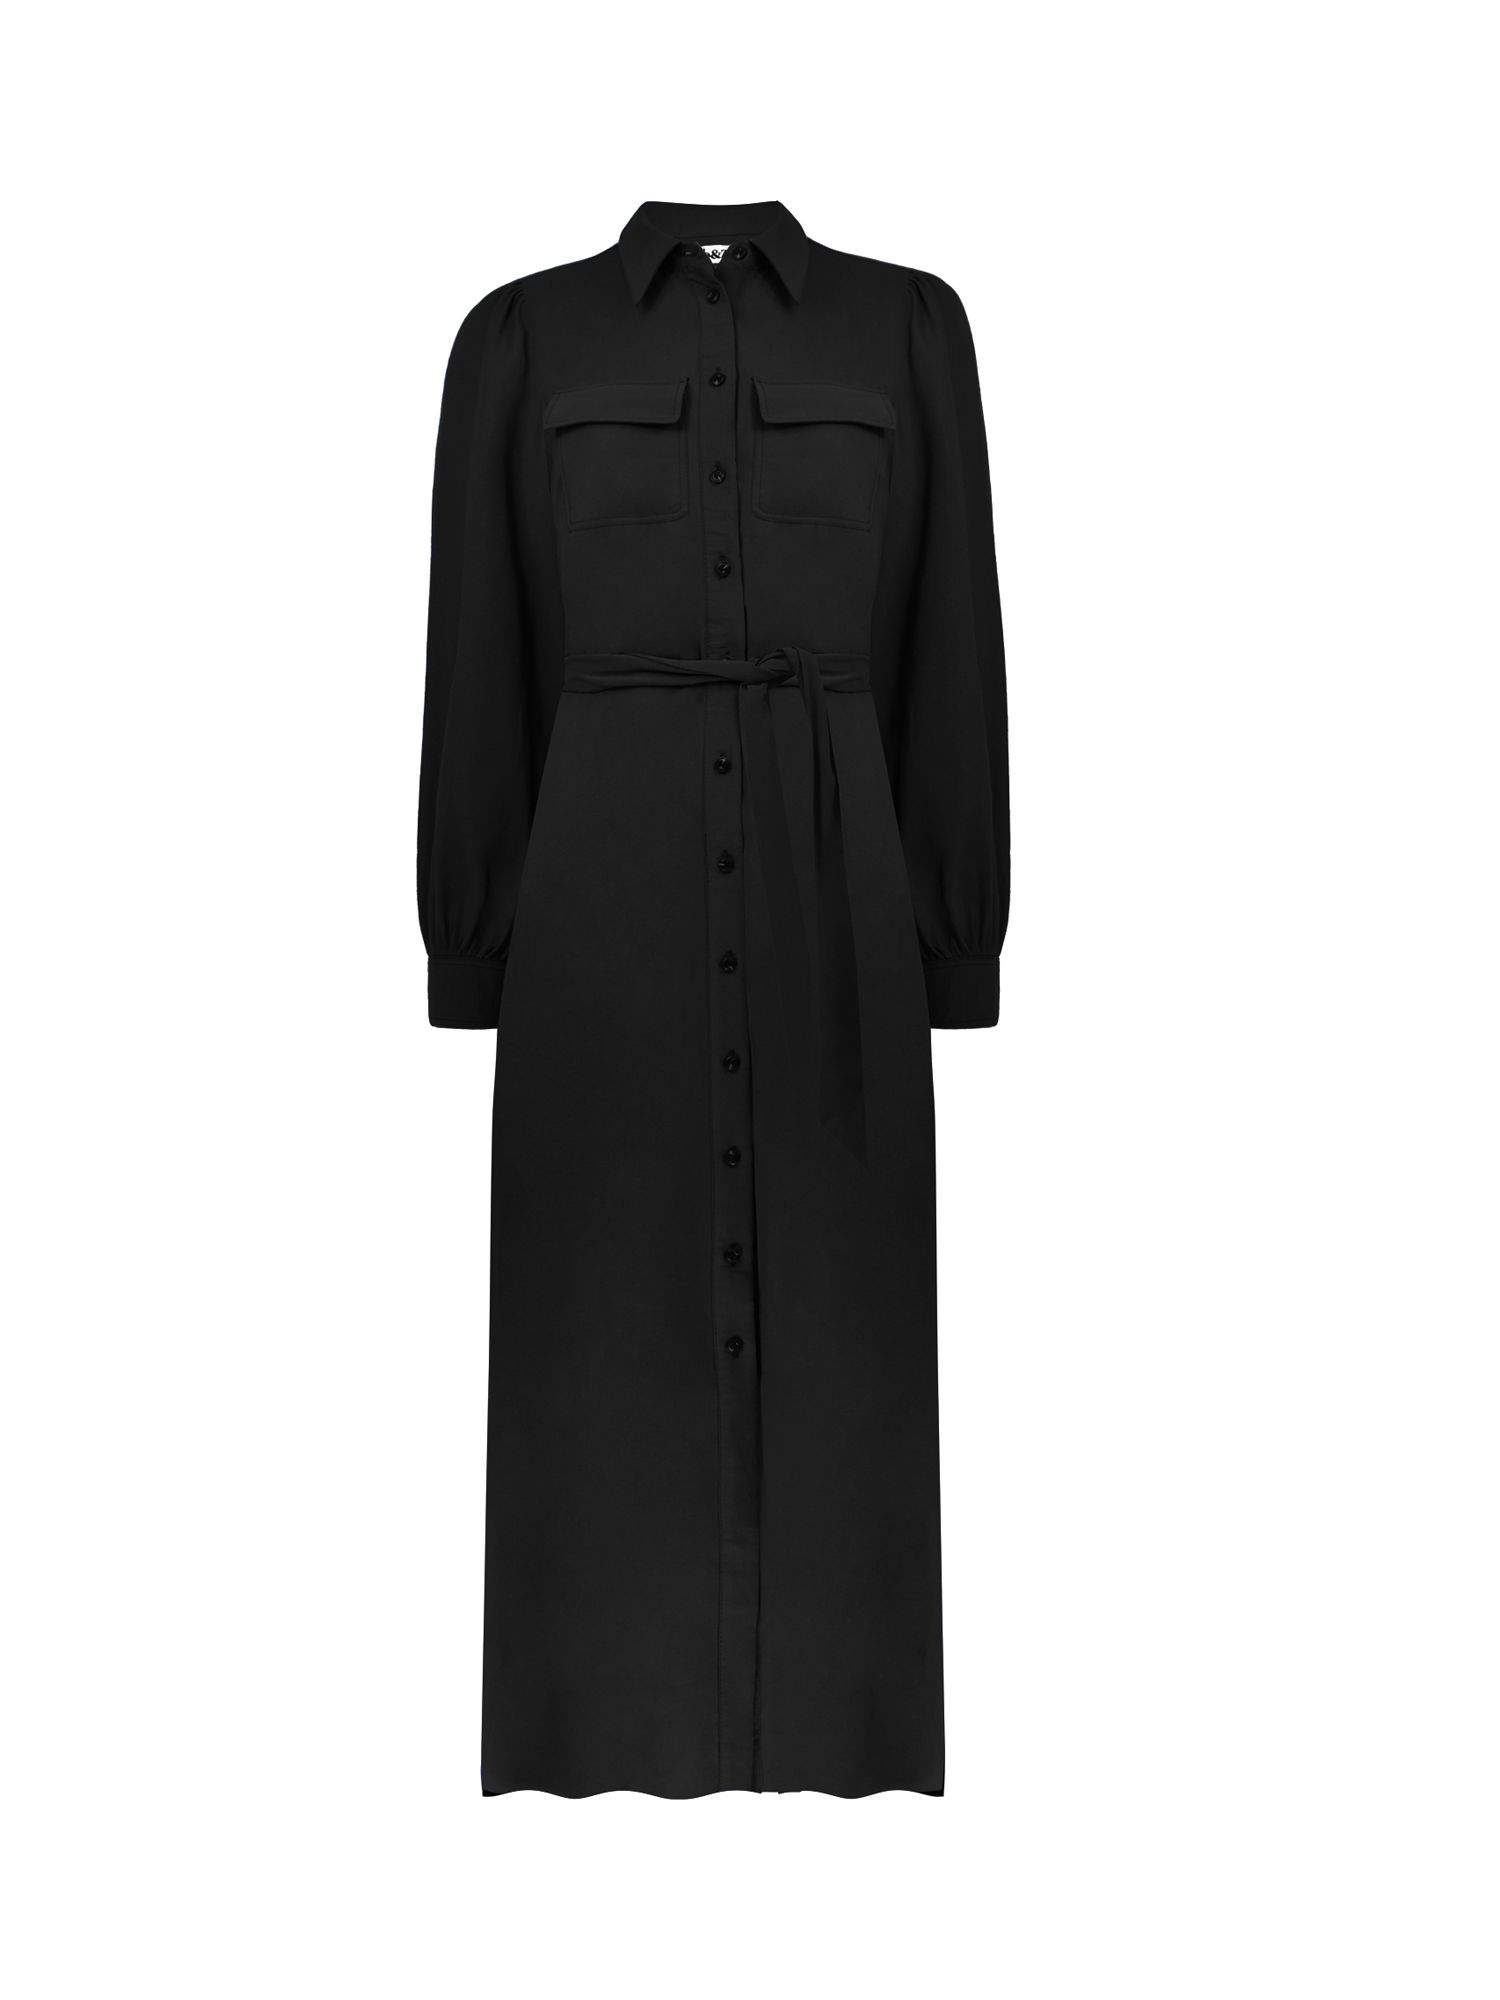 Ro&Zo Petite Modal Pocket Detail Shirt Dress, Black, 6